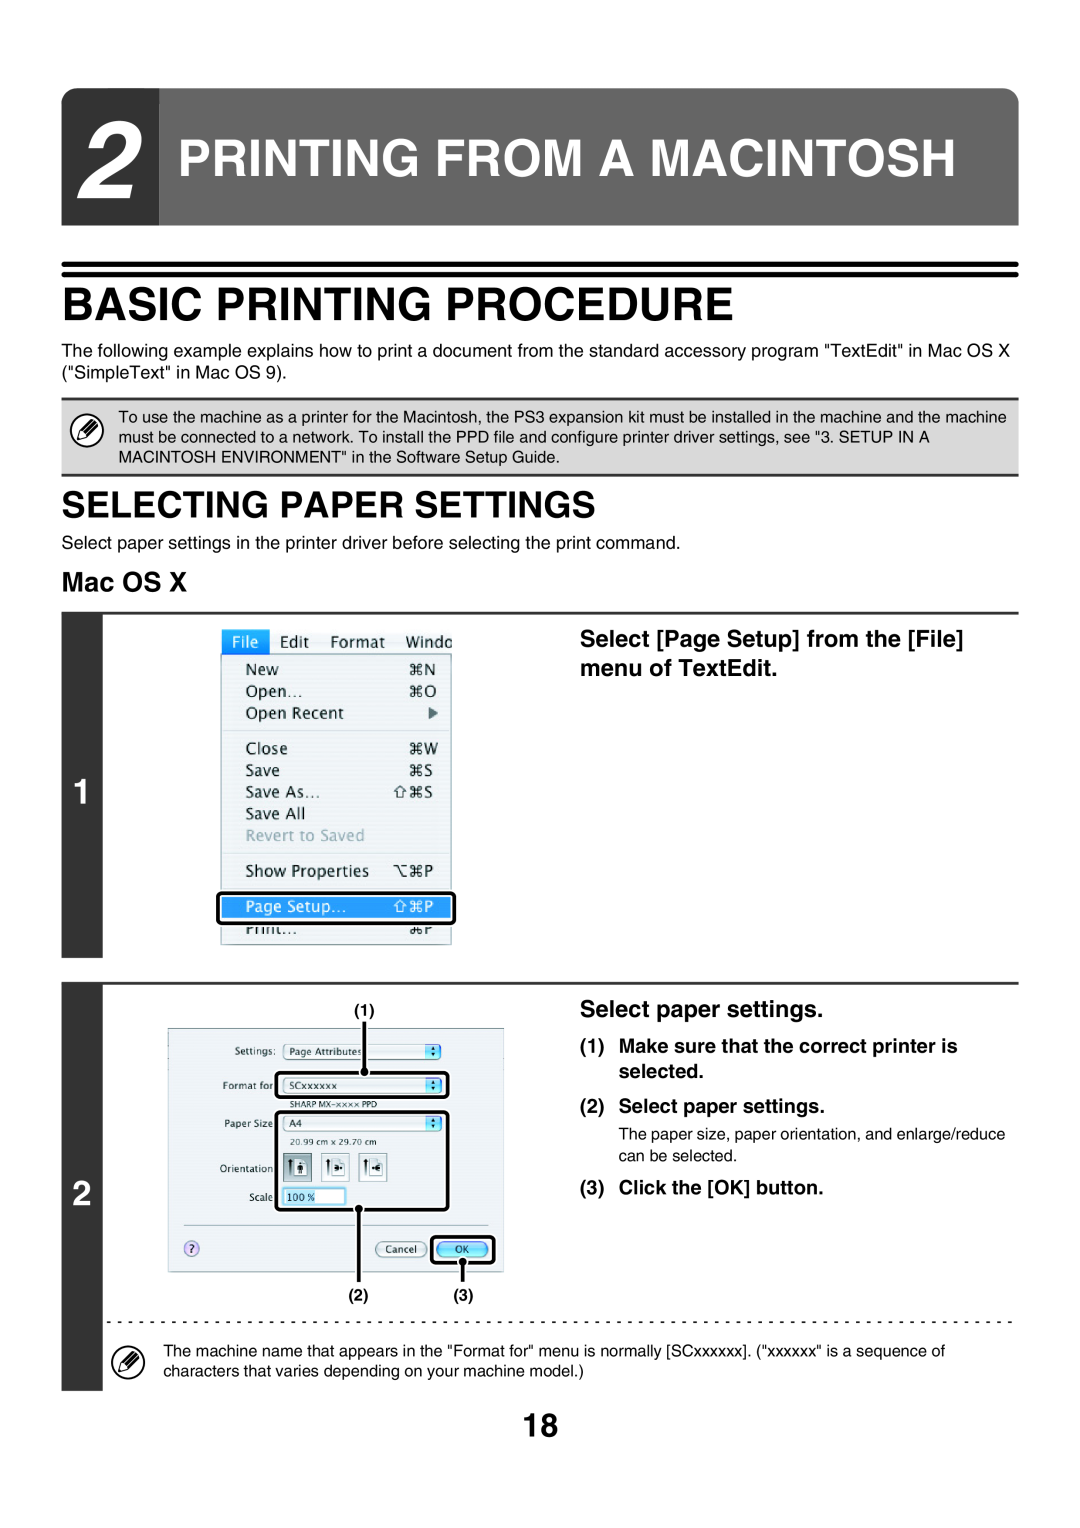 Sharp MX-6200N, MX-7000N manual Printing From A Macintosh, Selecting Paper Settings, Mac OS, Select paper settings, selected 